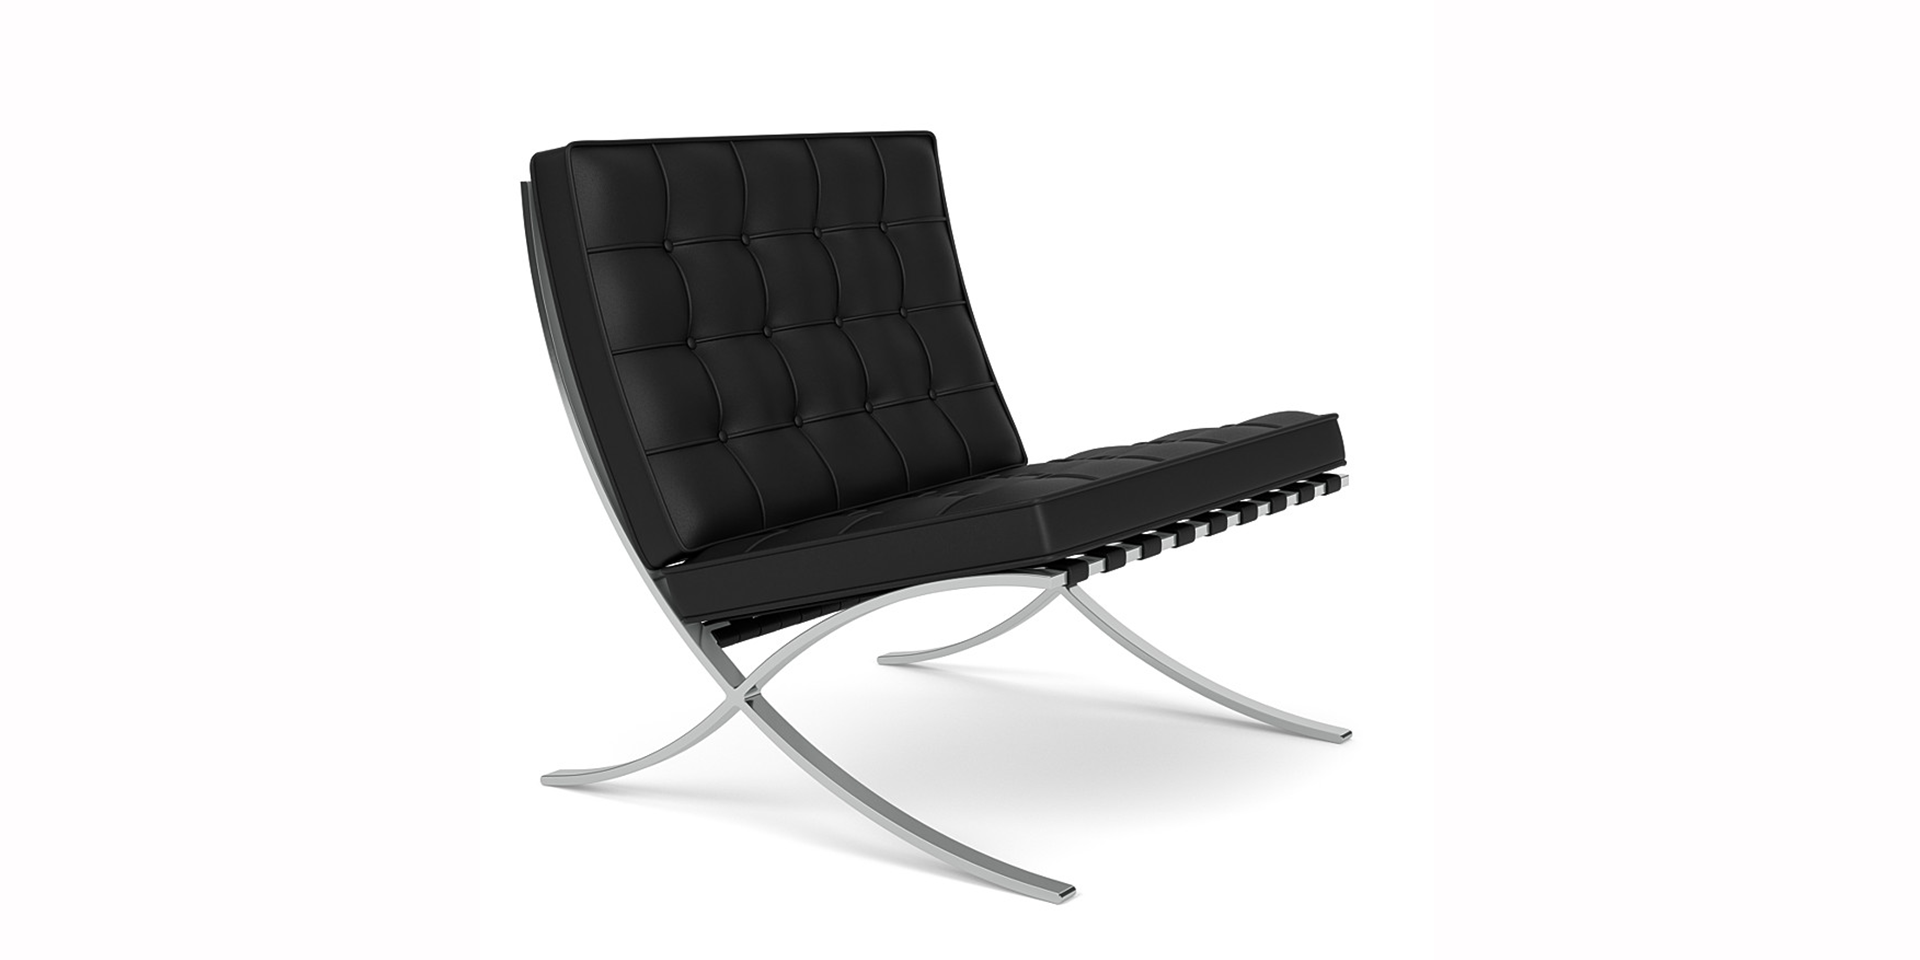 The oft replicated Barcelona chair originating from the Bauhaus era.